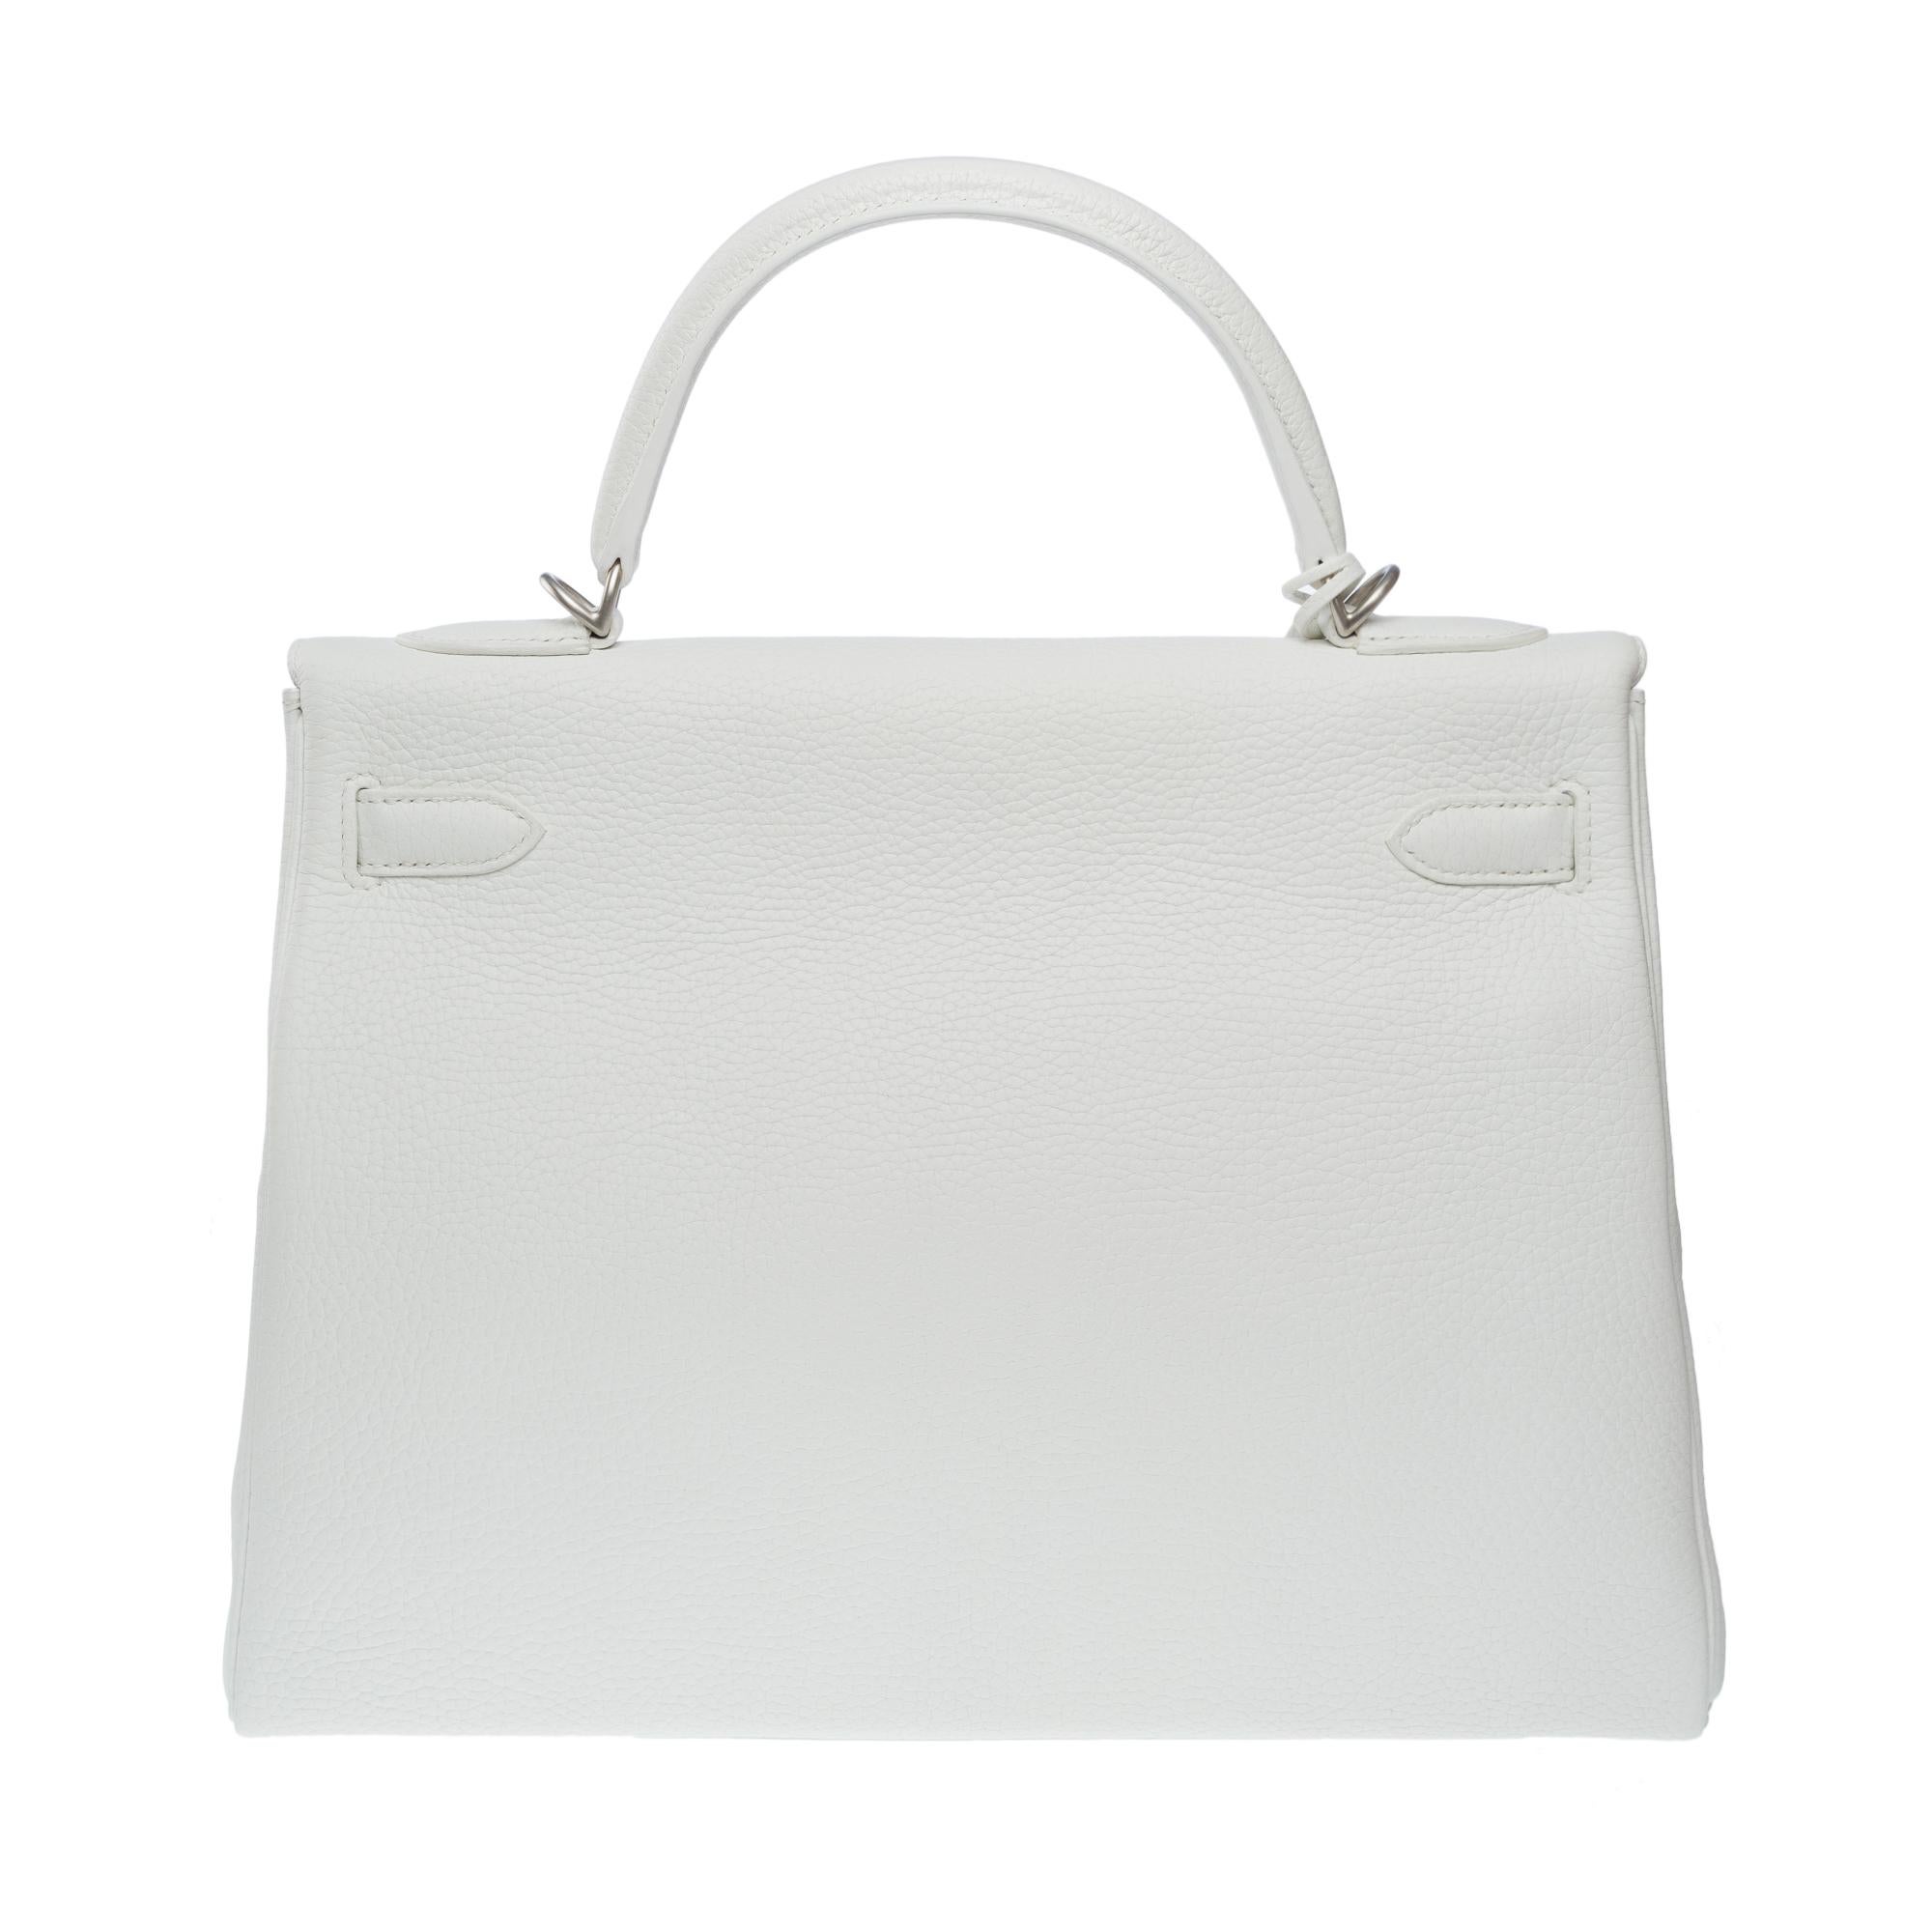 Women's Hermès Kelly 32 handbag strap (HSO) in White & Grey interior leather, BSHW